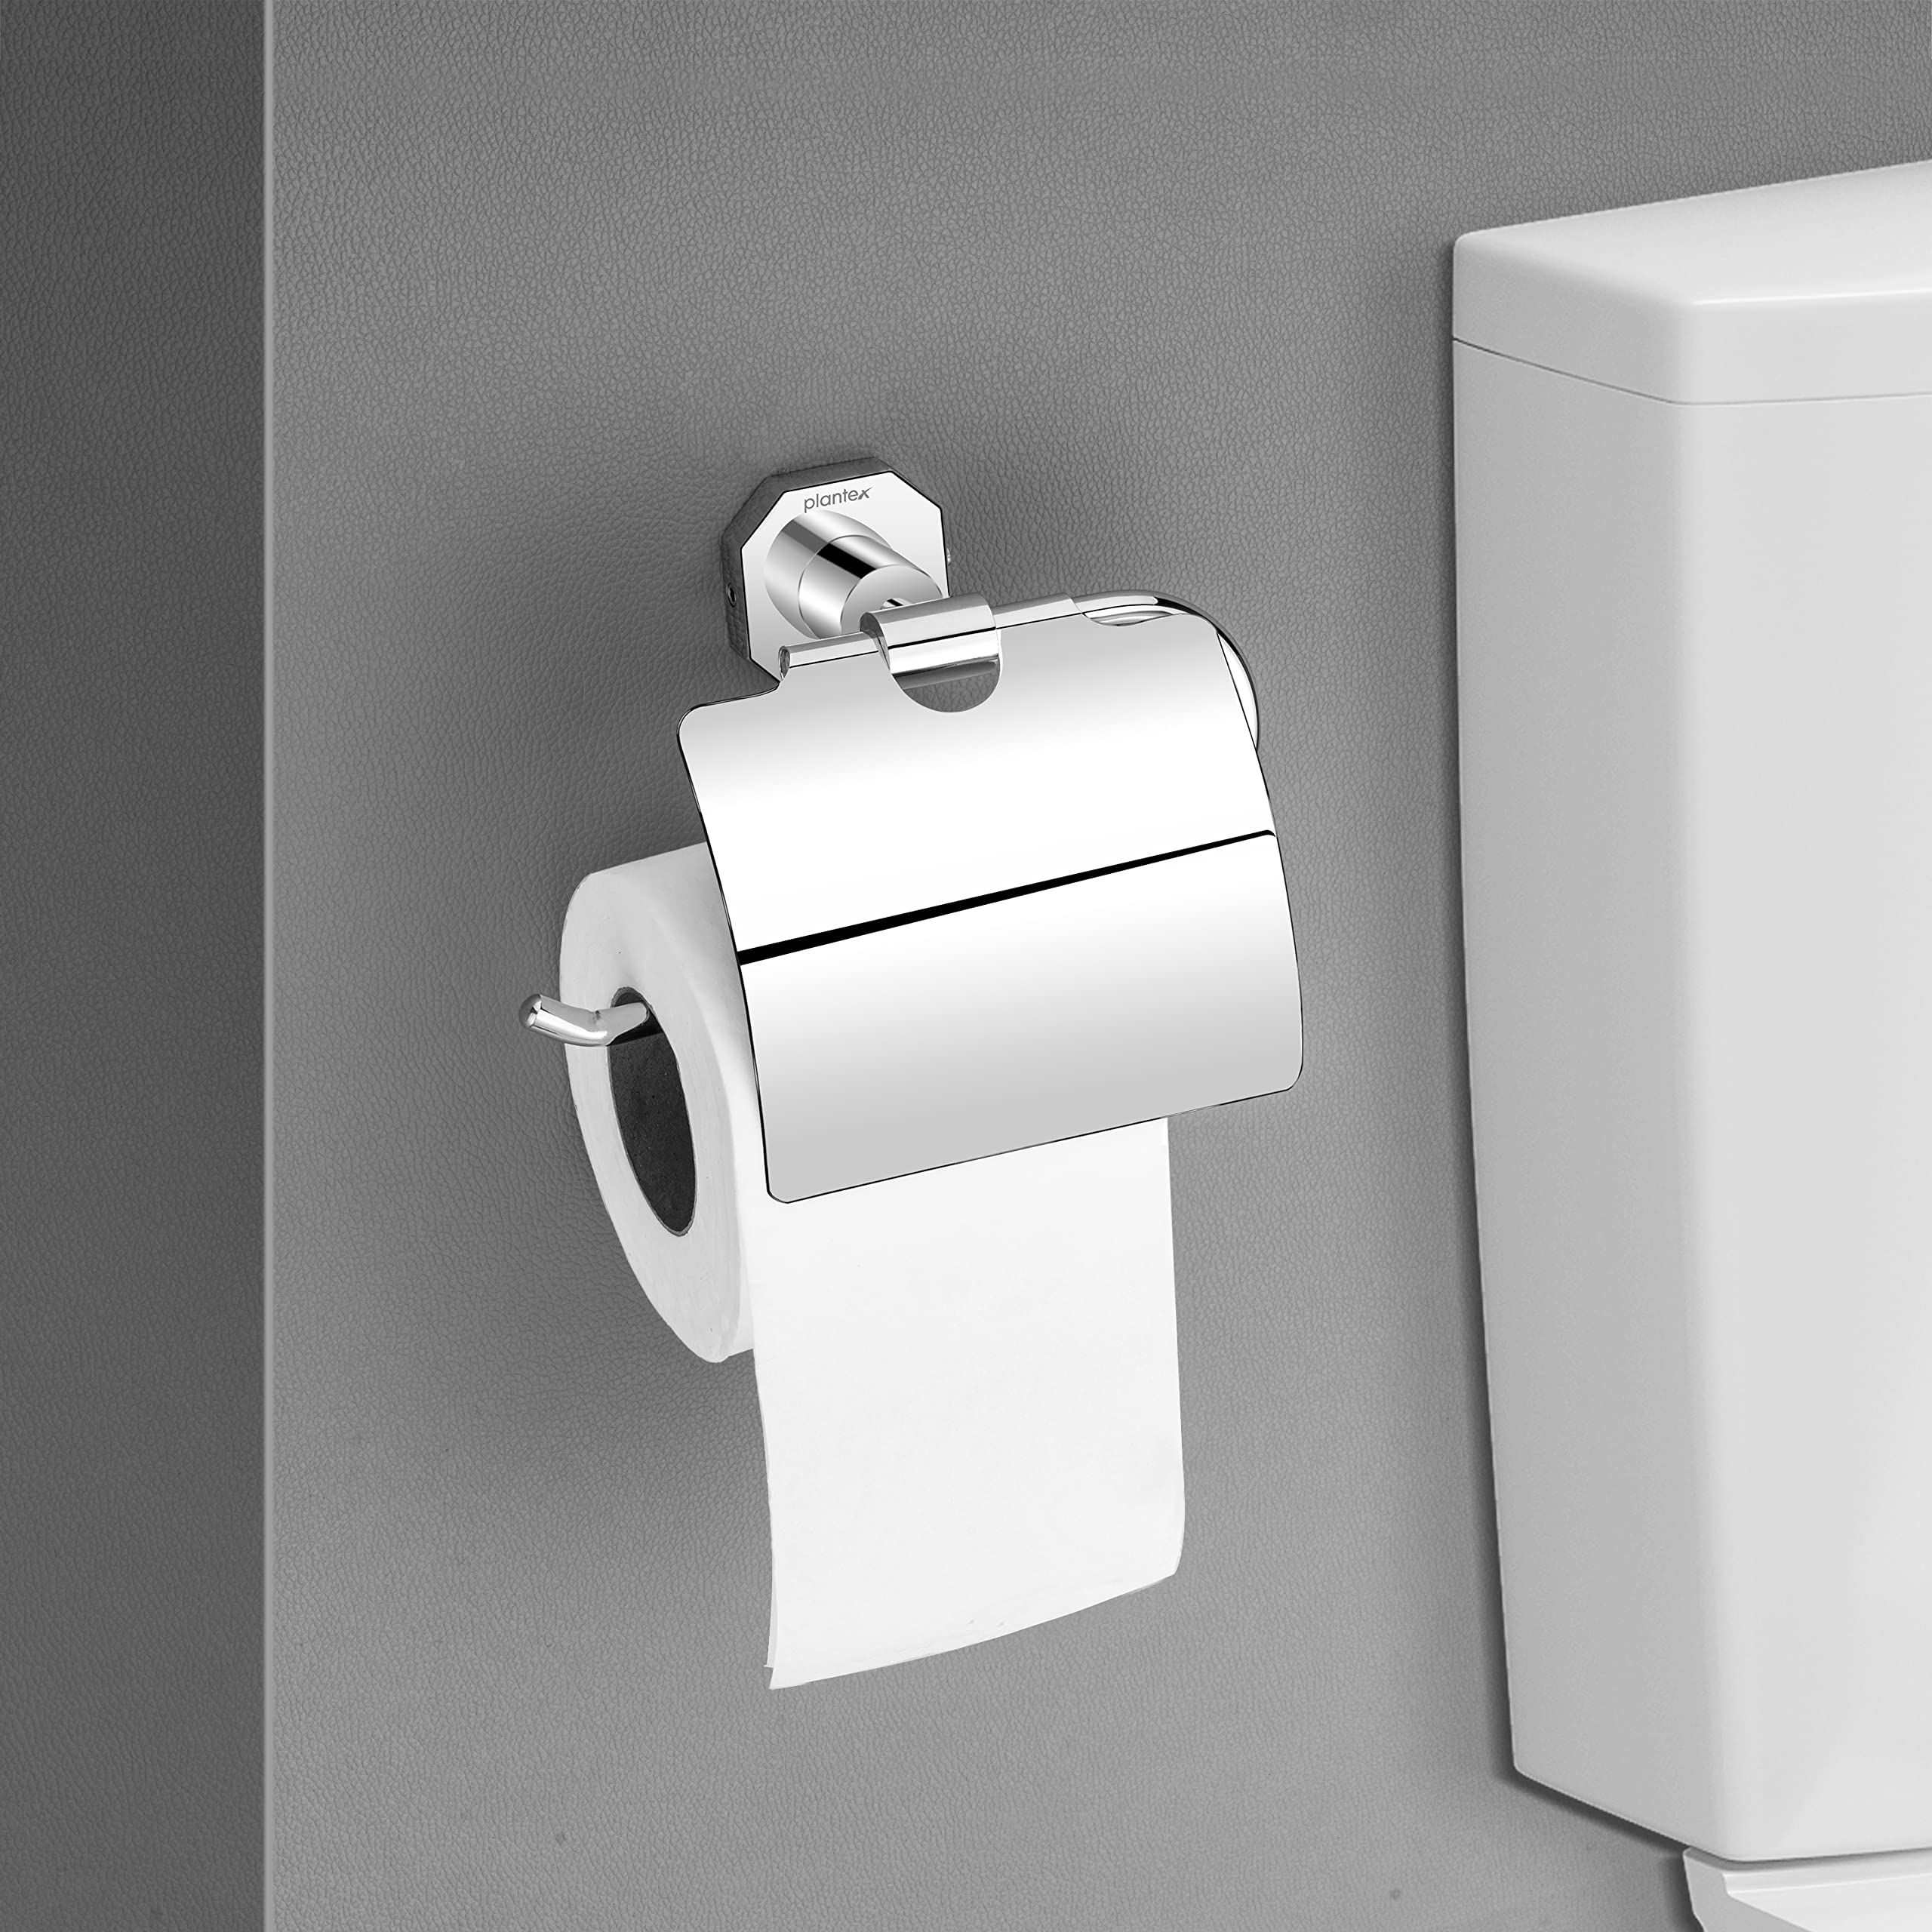 Plantex Nipron Toilet/Tissue Paper Holder Stand for washroom - 304 Stainless Steel